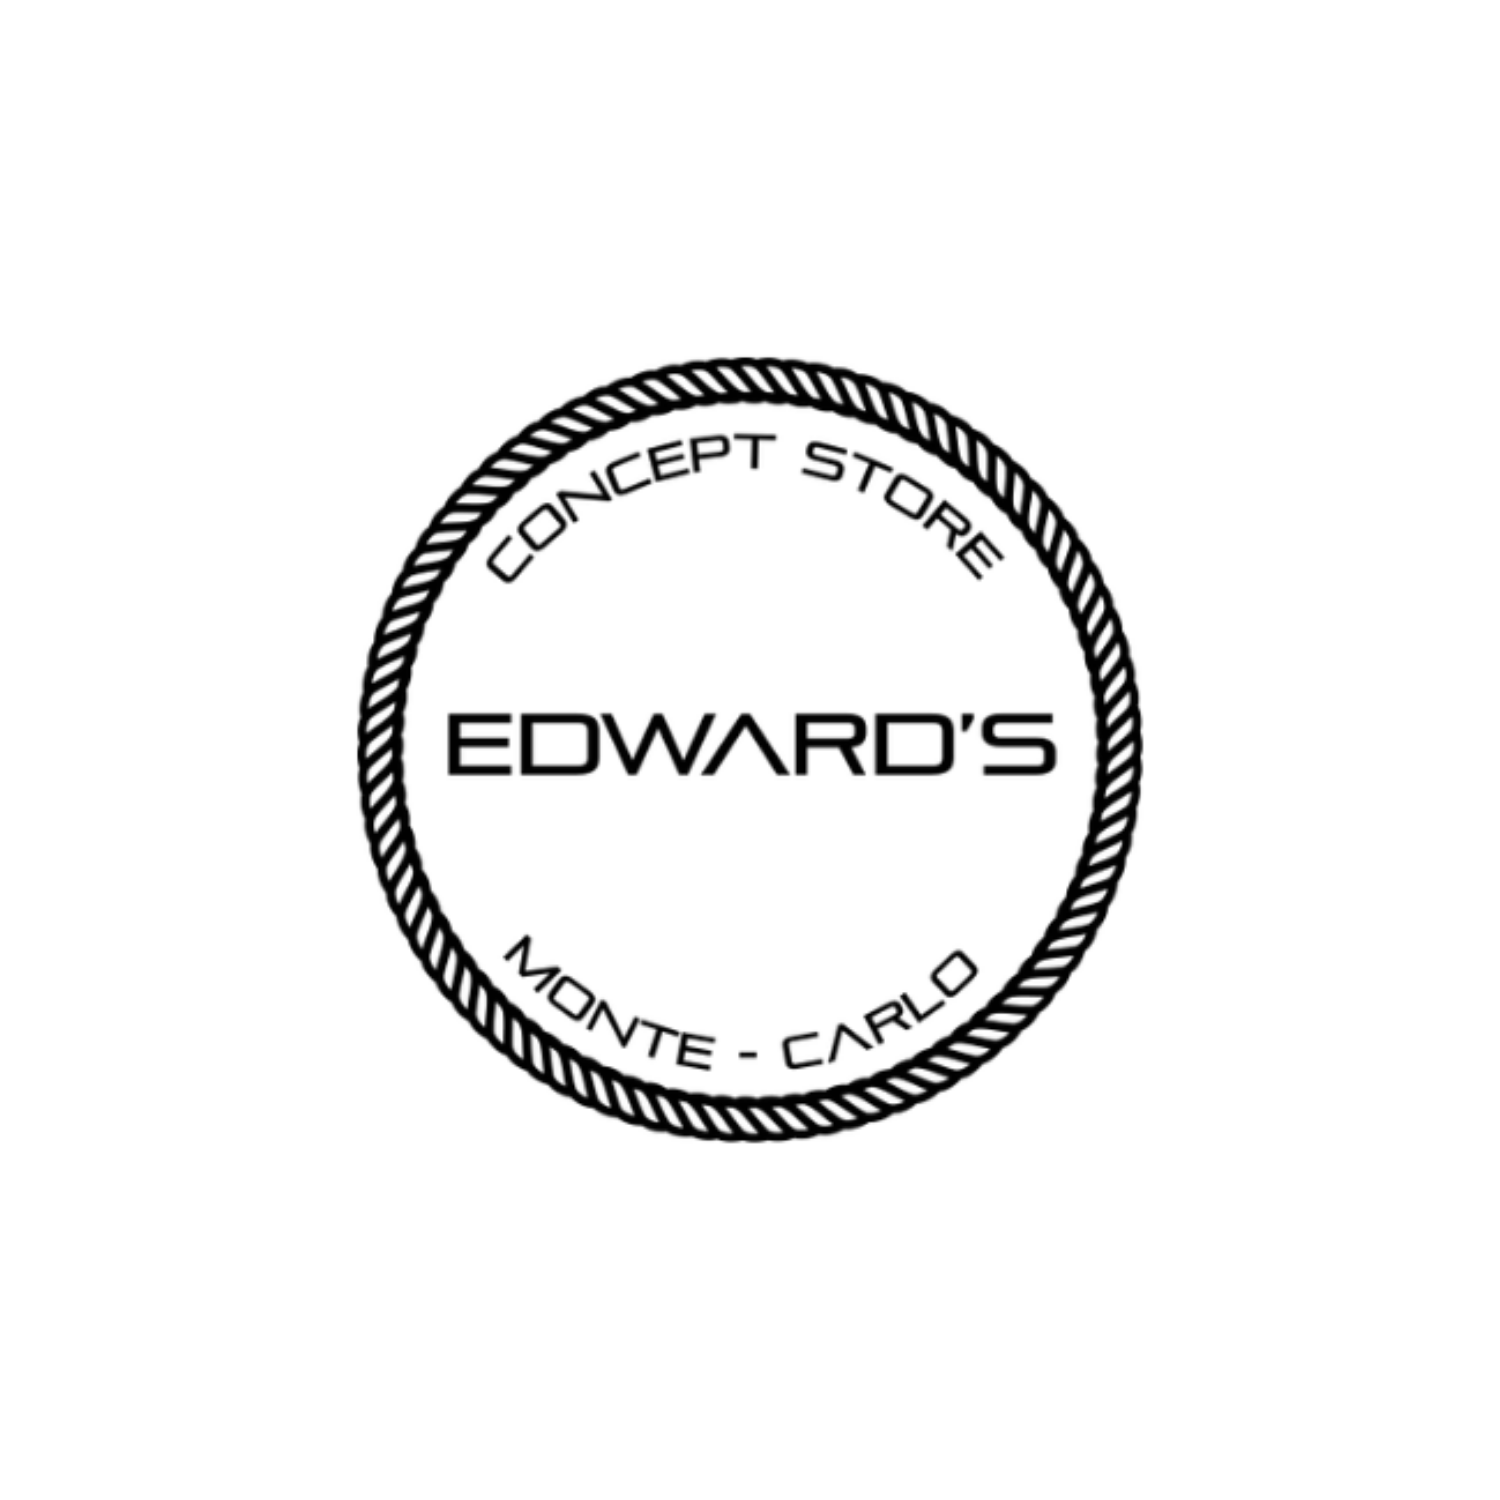 edwards-monaco-carlo-app-merchant-pret-a-porter